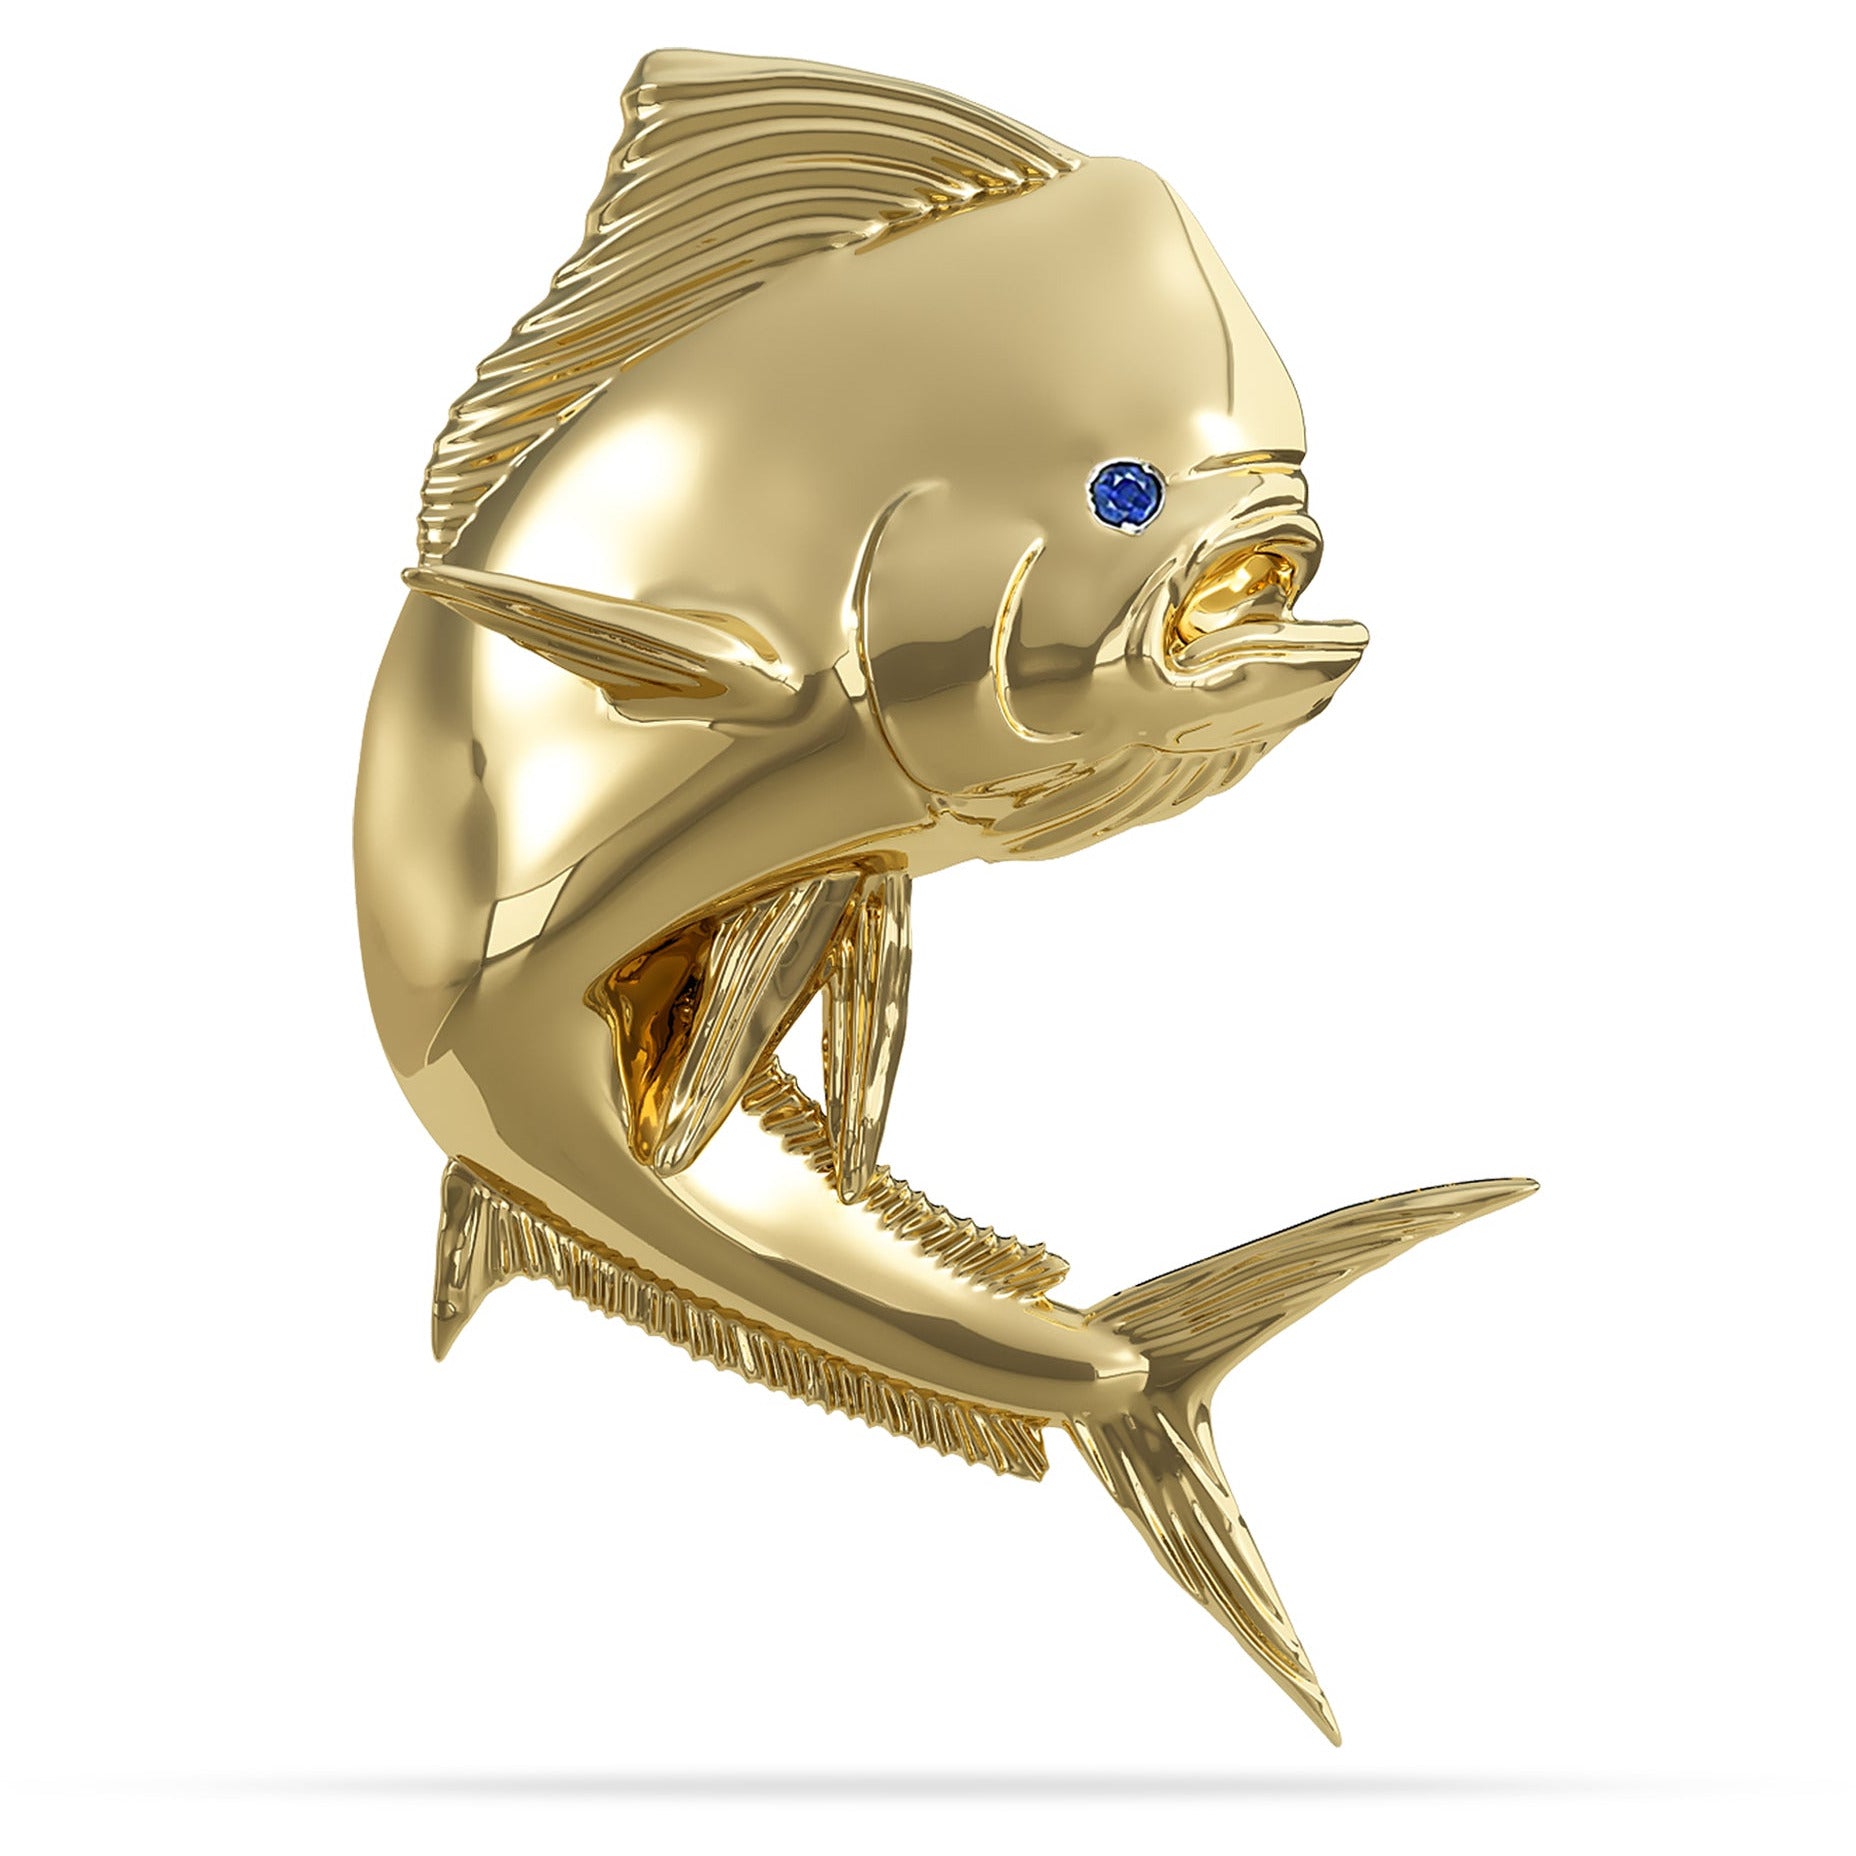 Solid 14k Gold Bull Mahi Mahi Pendant High Polished Mirror Finish With Blue Sapphire Eye with A Mariner Shackle Bail Custom Designed By Nautical Treasure Jewelry In The Florida Keys 